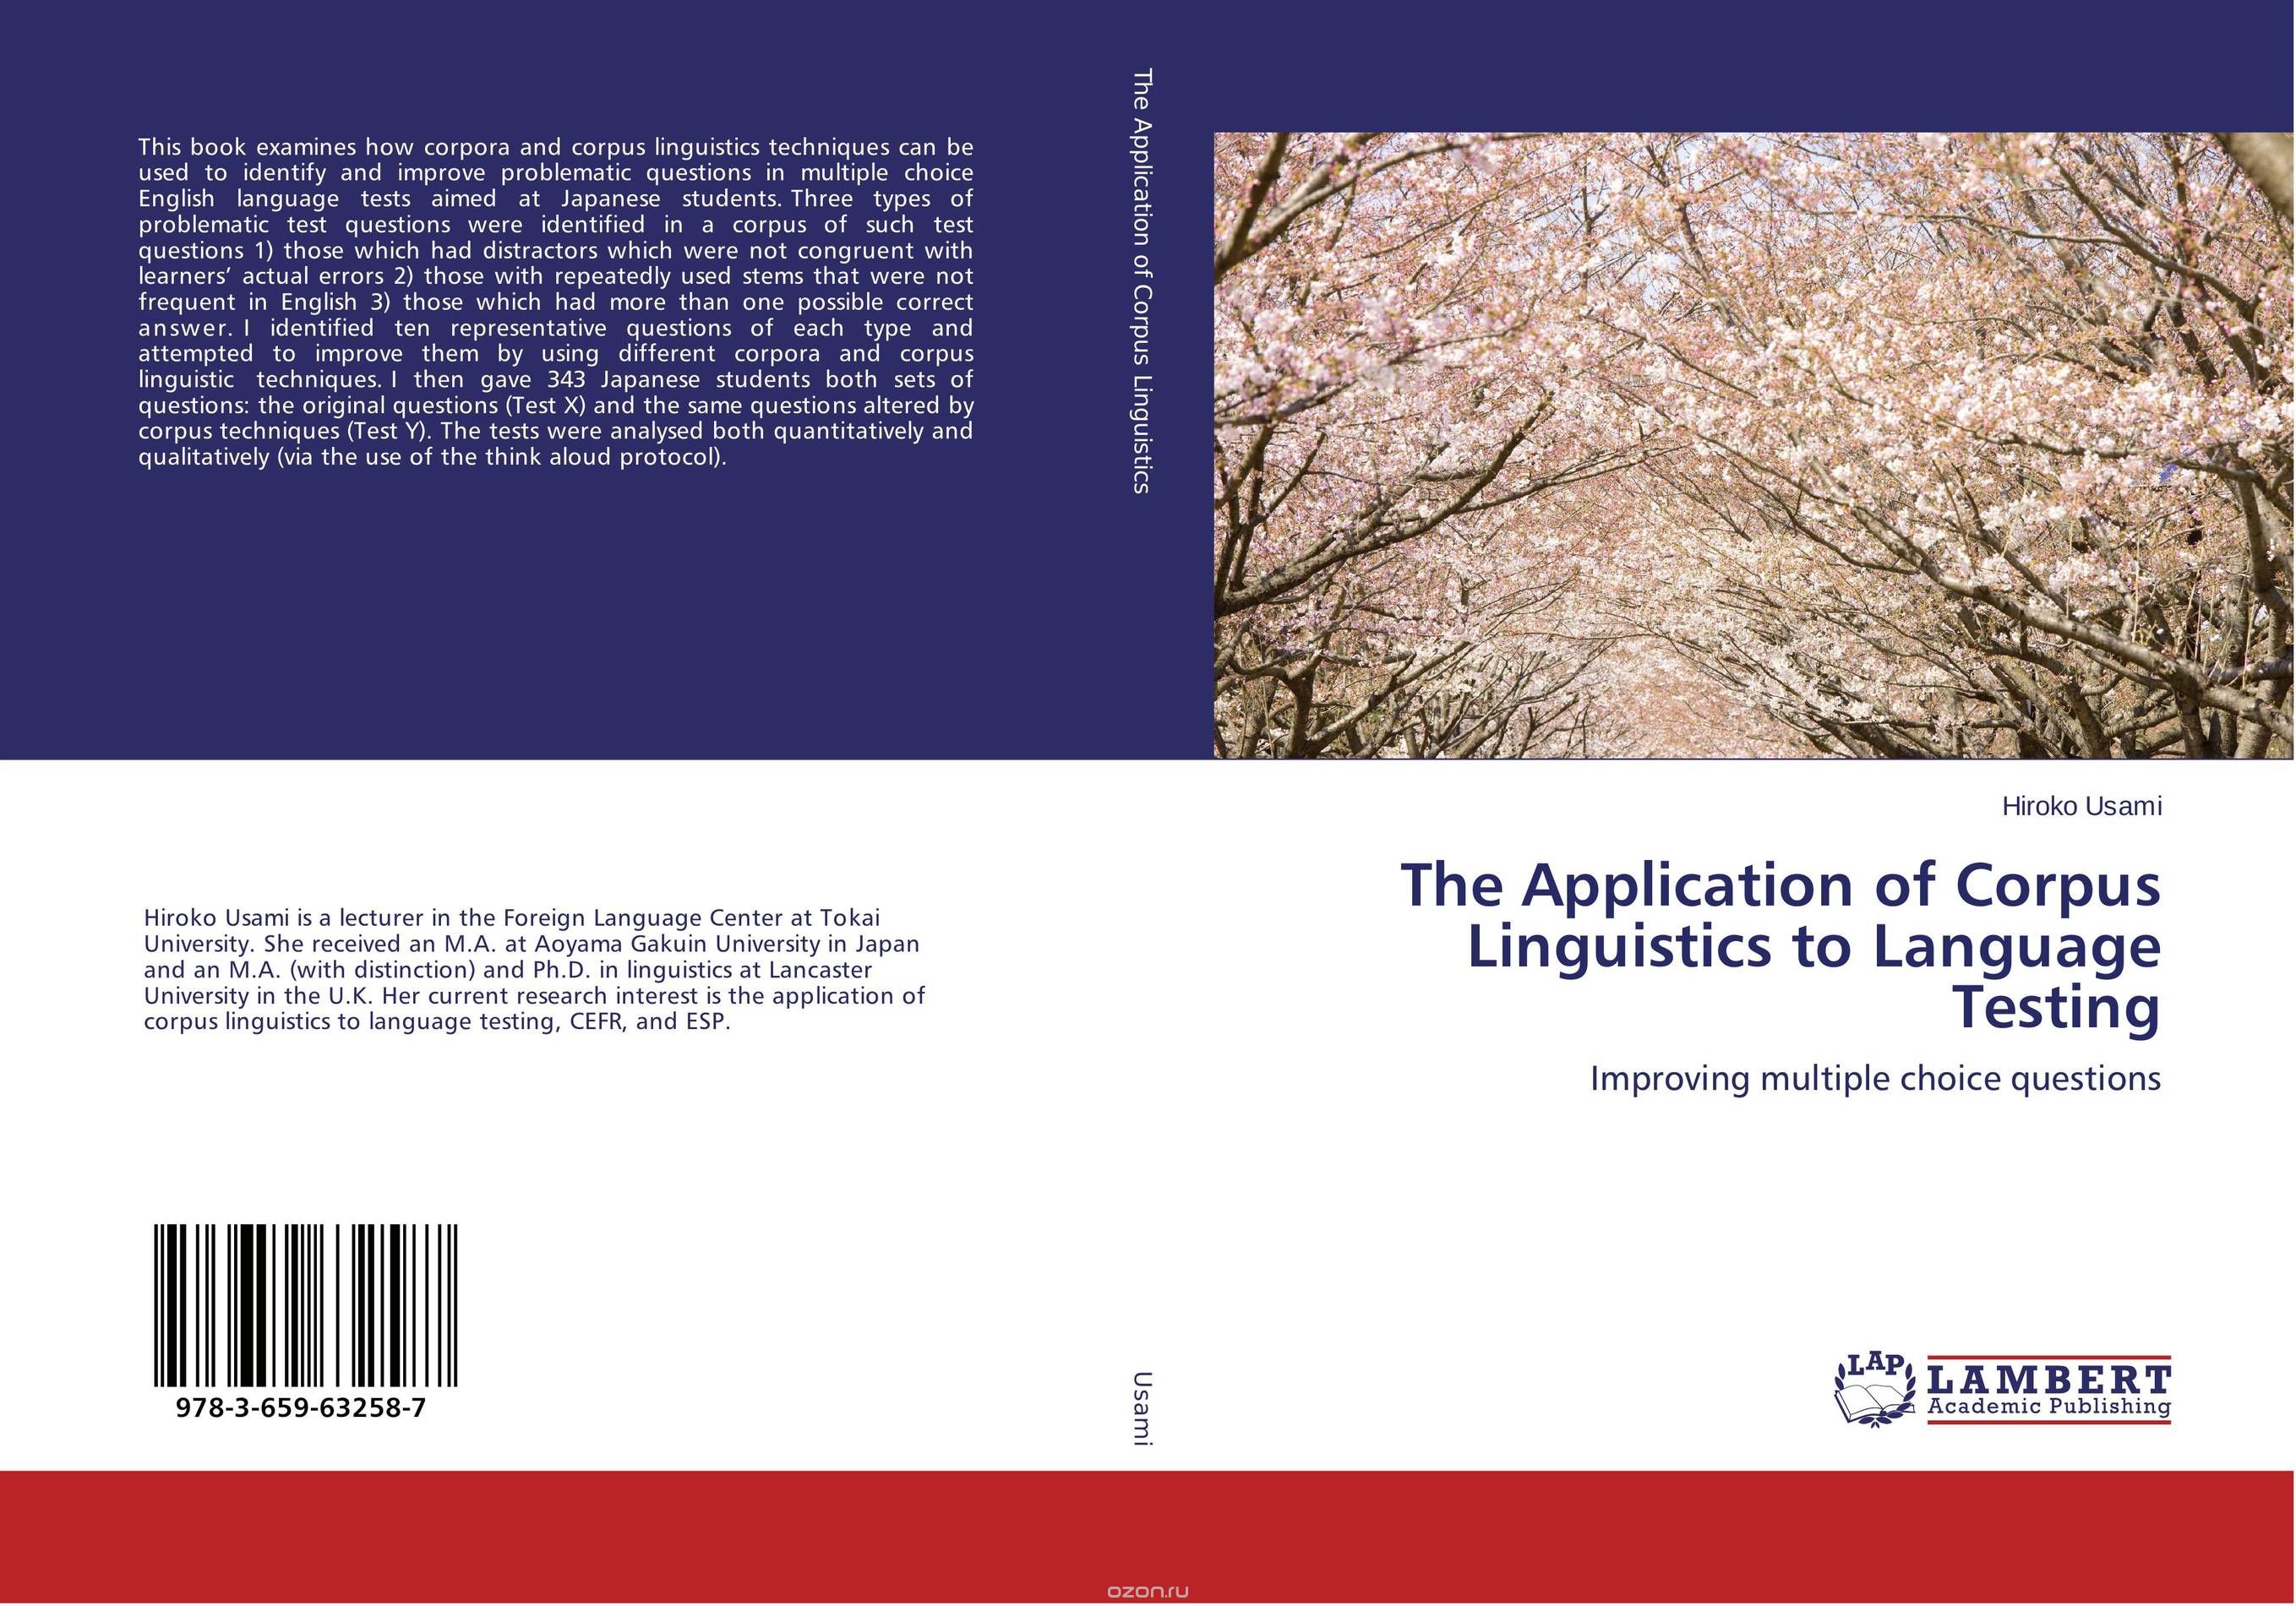 Скачать книгу "The Application of Corpus Linguistics to Language Testing"